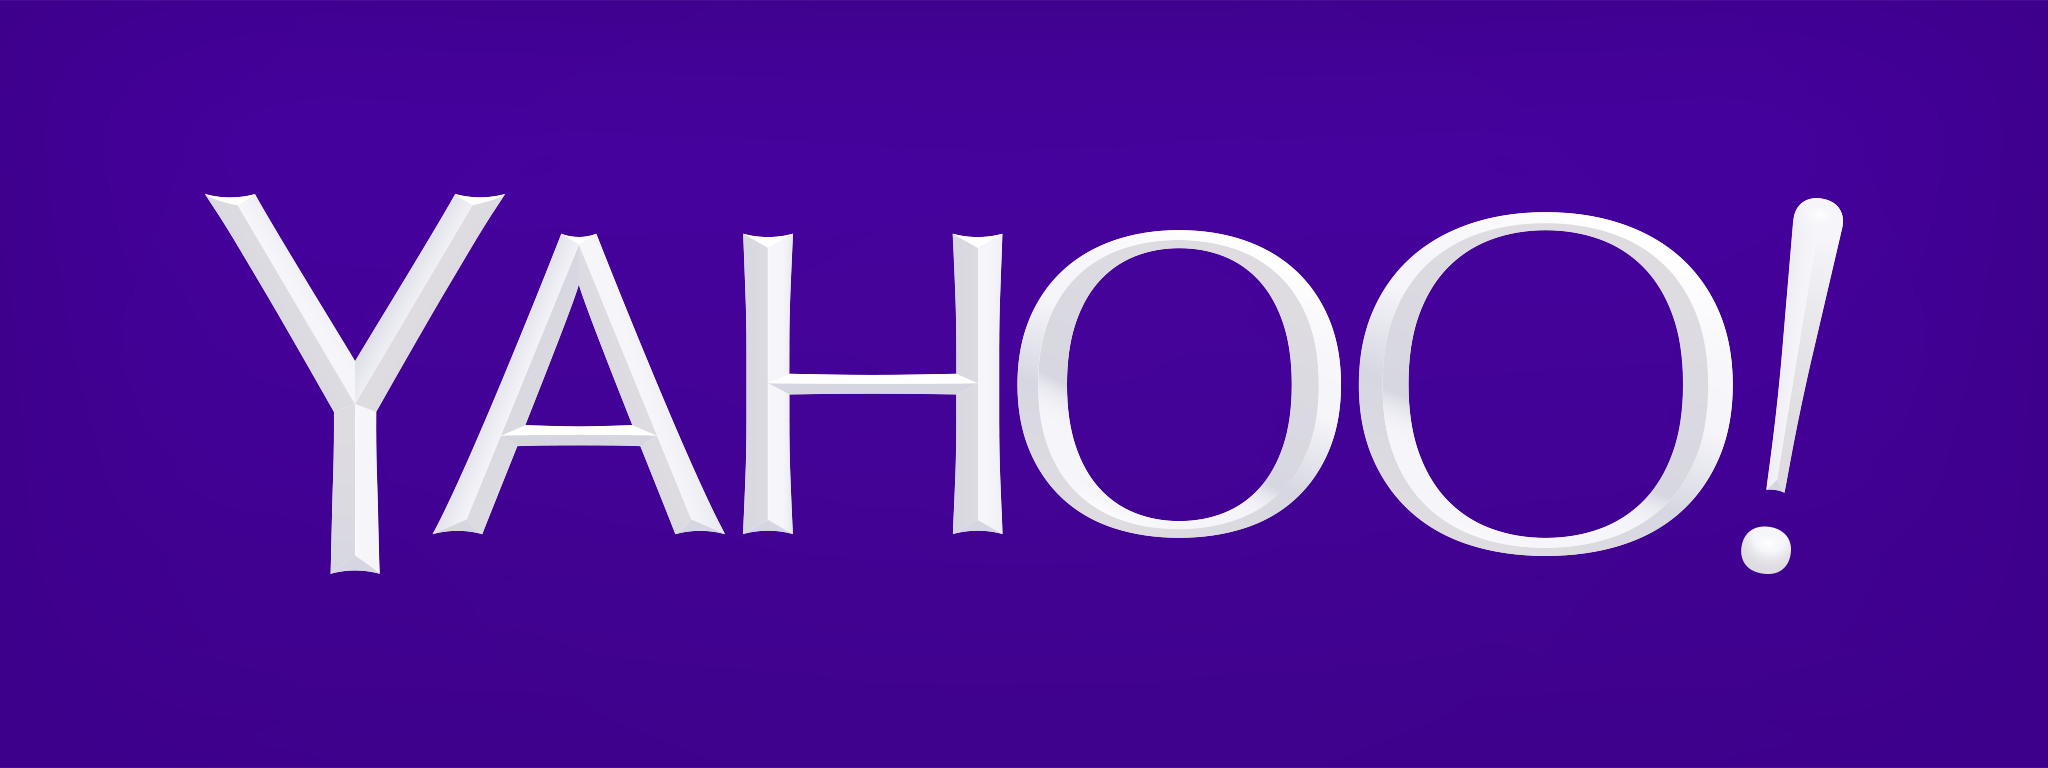 Yahoo_Logo_Purple.png